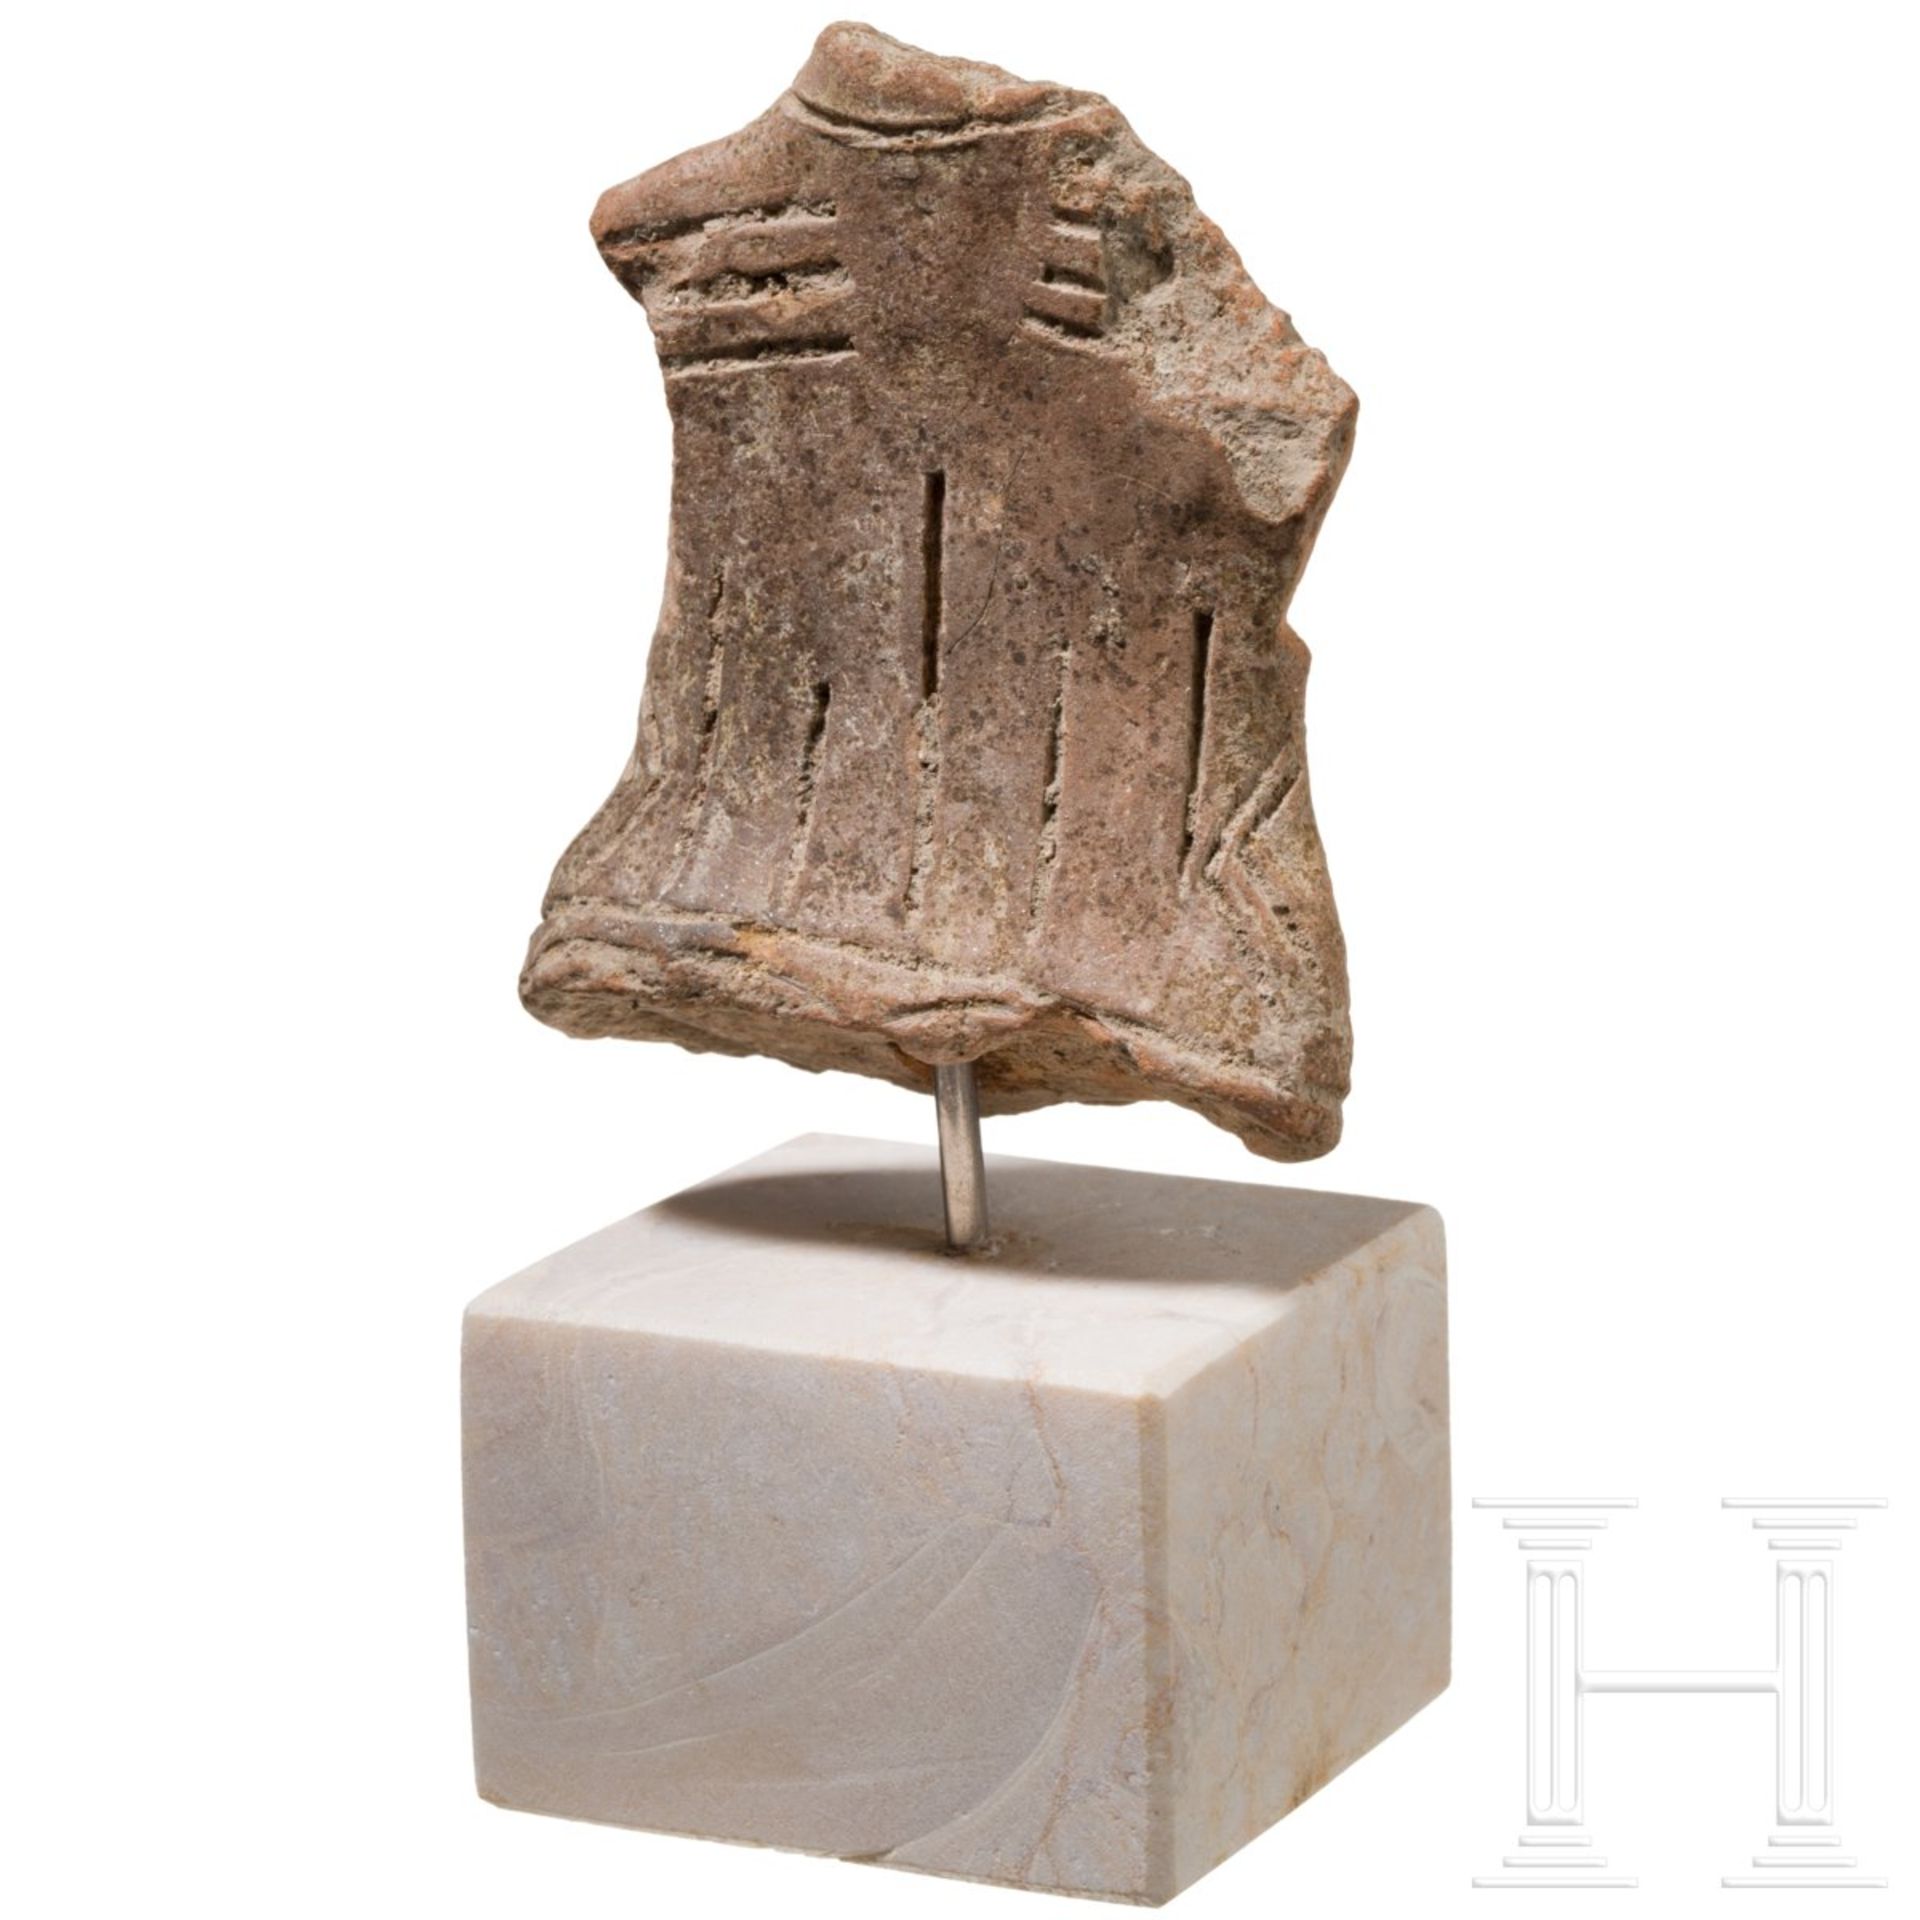 Terrakotta-Idol, Vinca-Kultur, Südosteuropa, 4. Jtsd. v. Chr. - Bild 5 aus 5